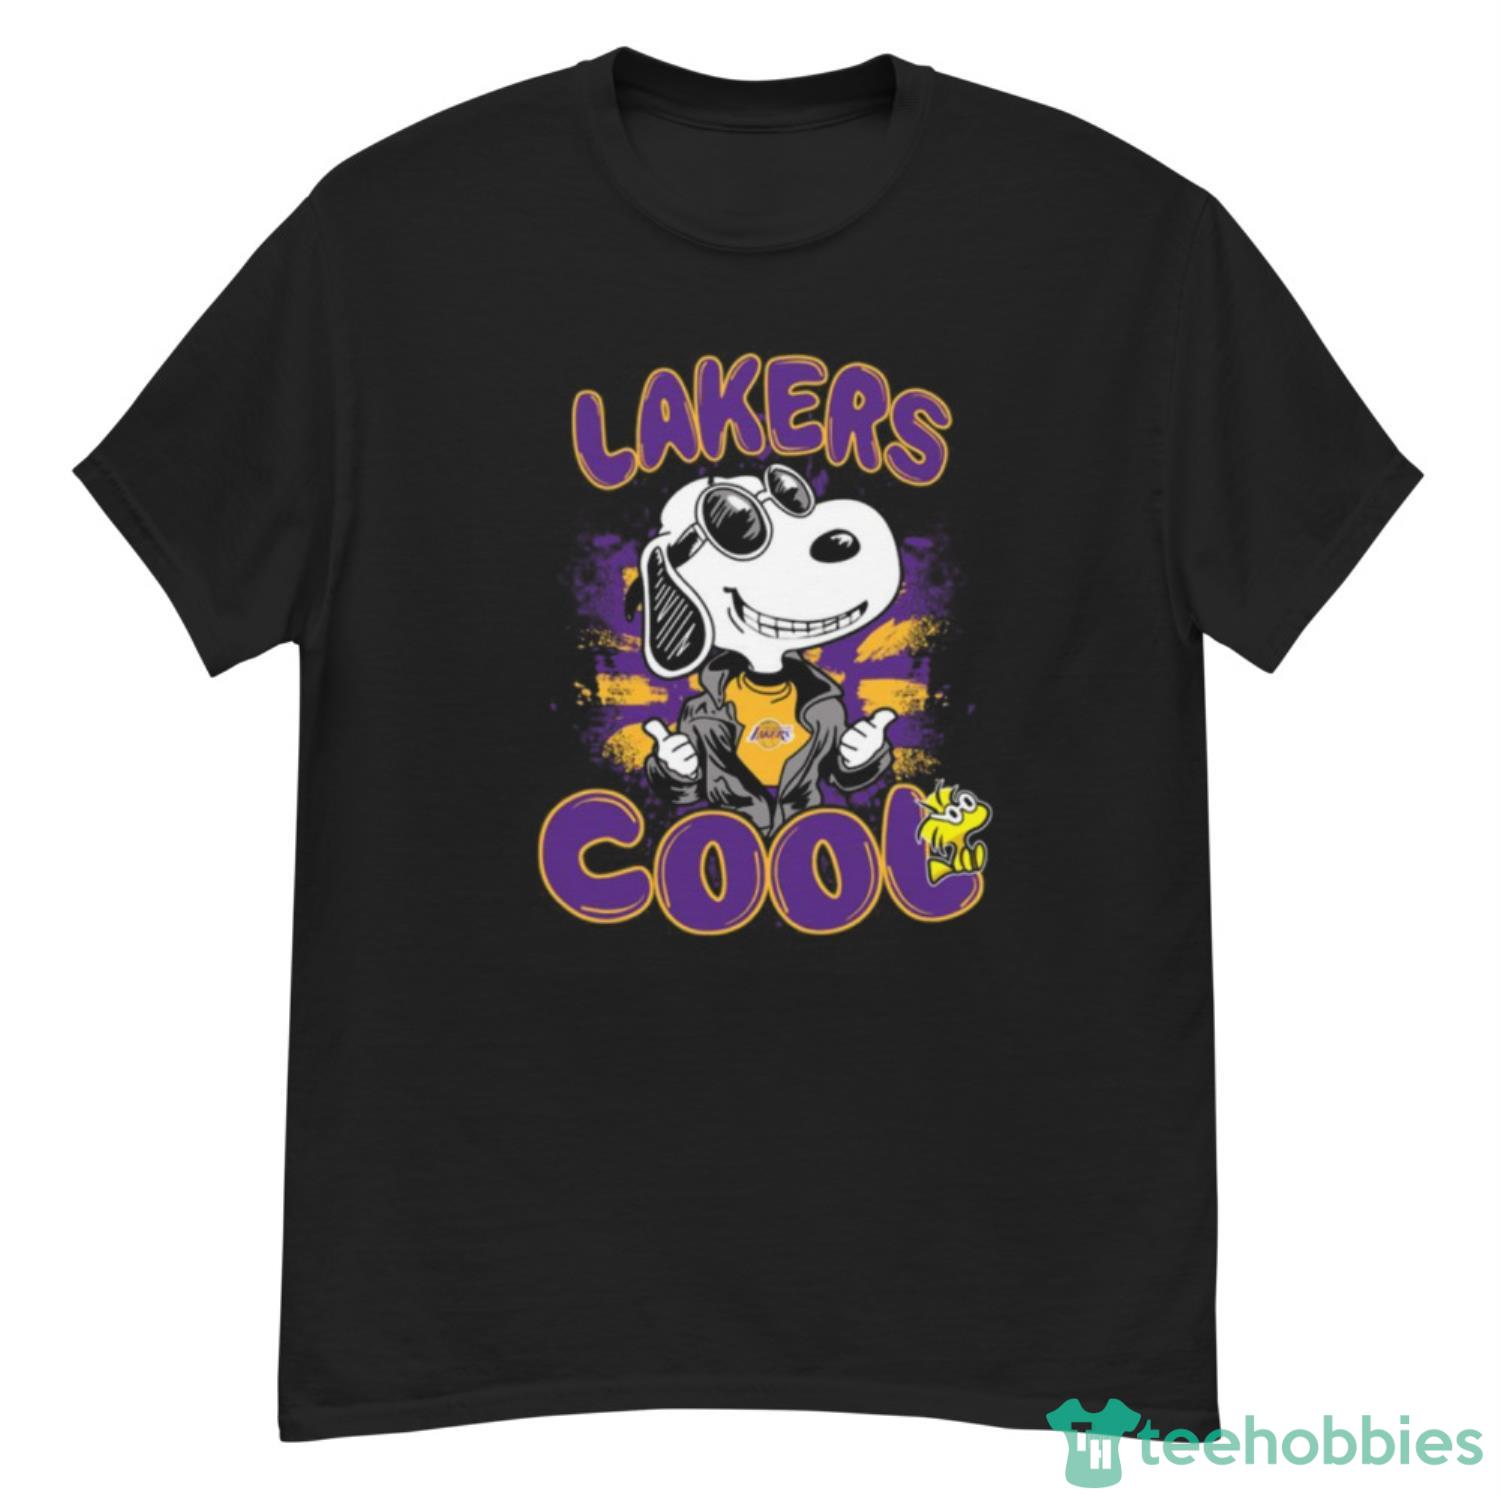 NBA Basketball Los Angeles Lakers Cool Snoopy Shirt T Shirt - G500 Men’s Classic T-Shirt